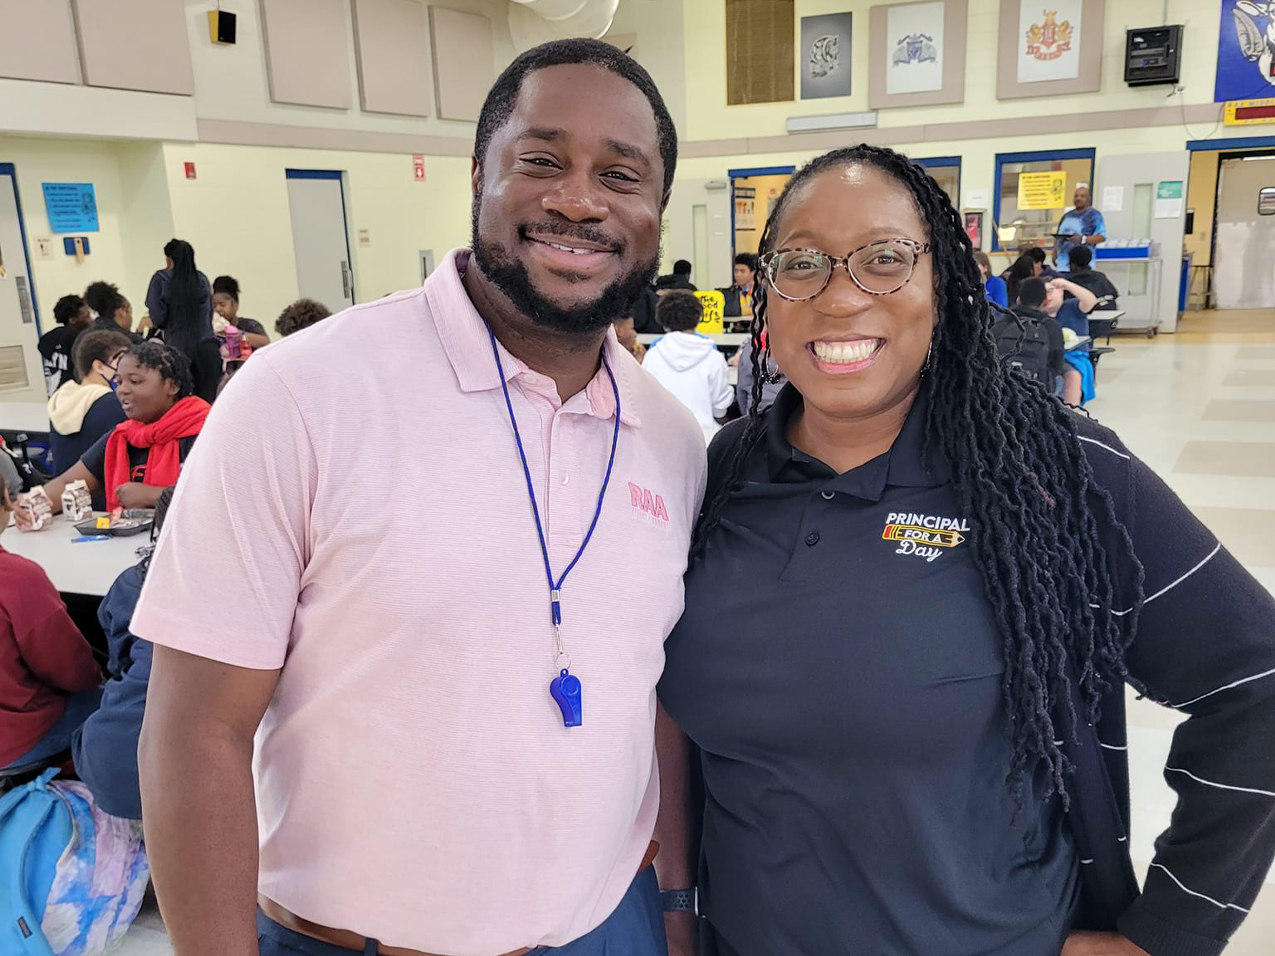 Kenyatta Rosier and Dr. Marcus Scott on lunchroom duty at Augusta Raa Middle School!